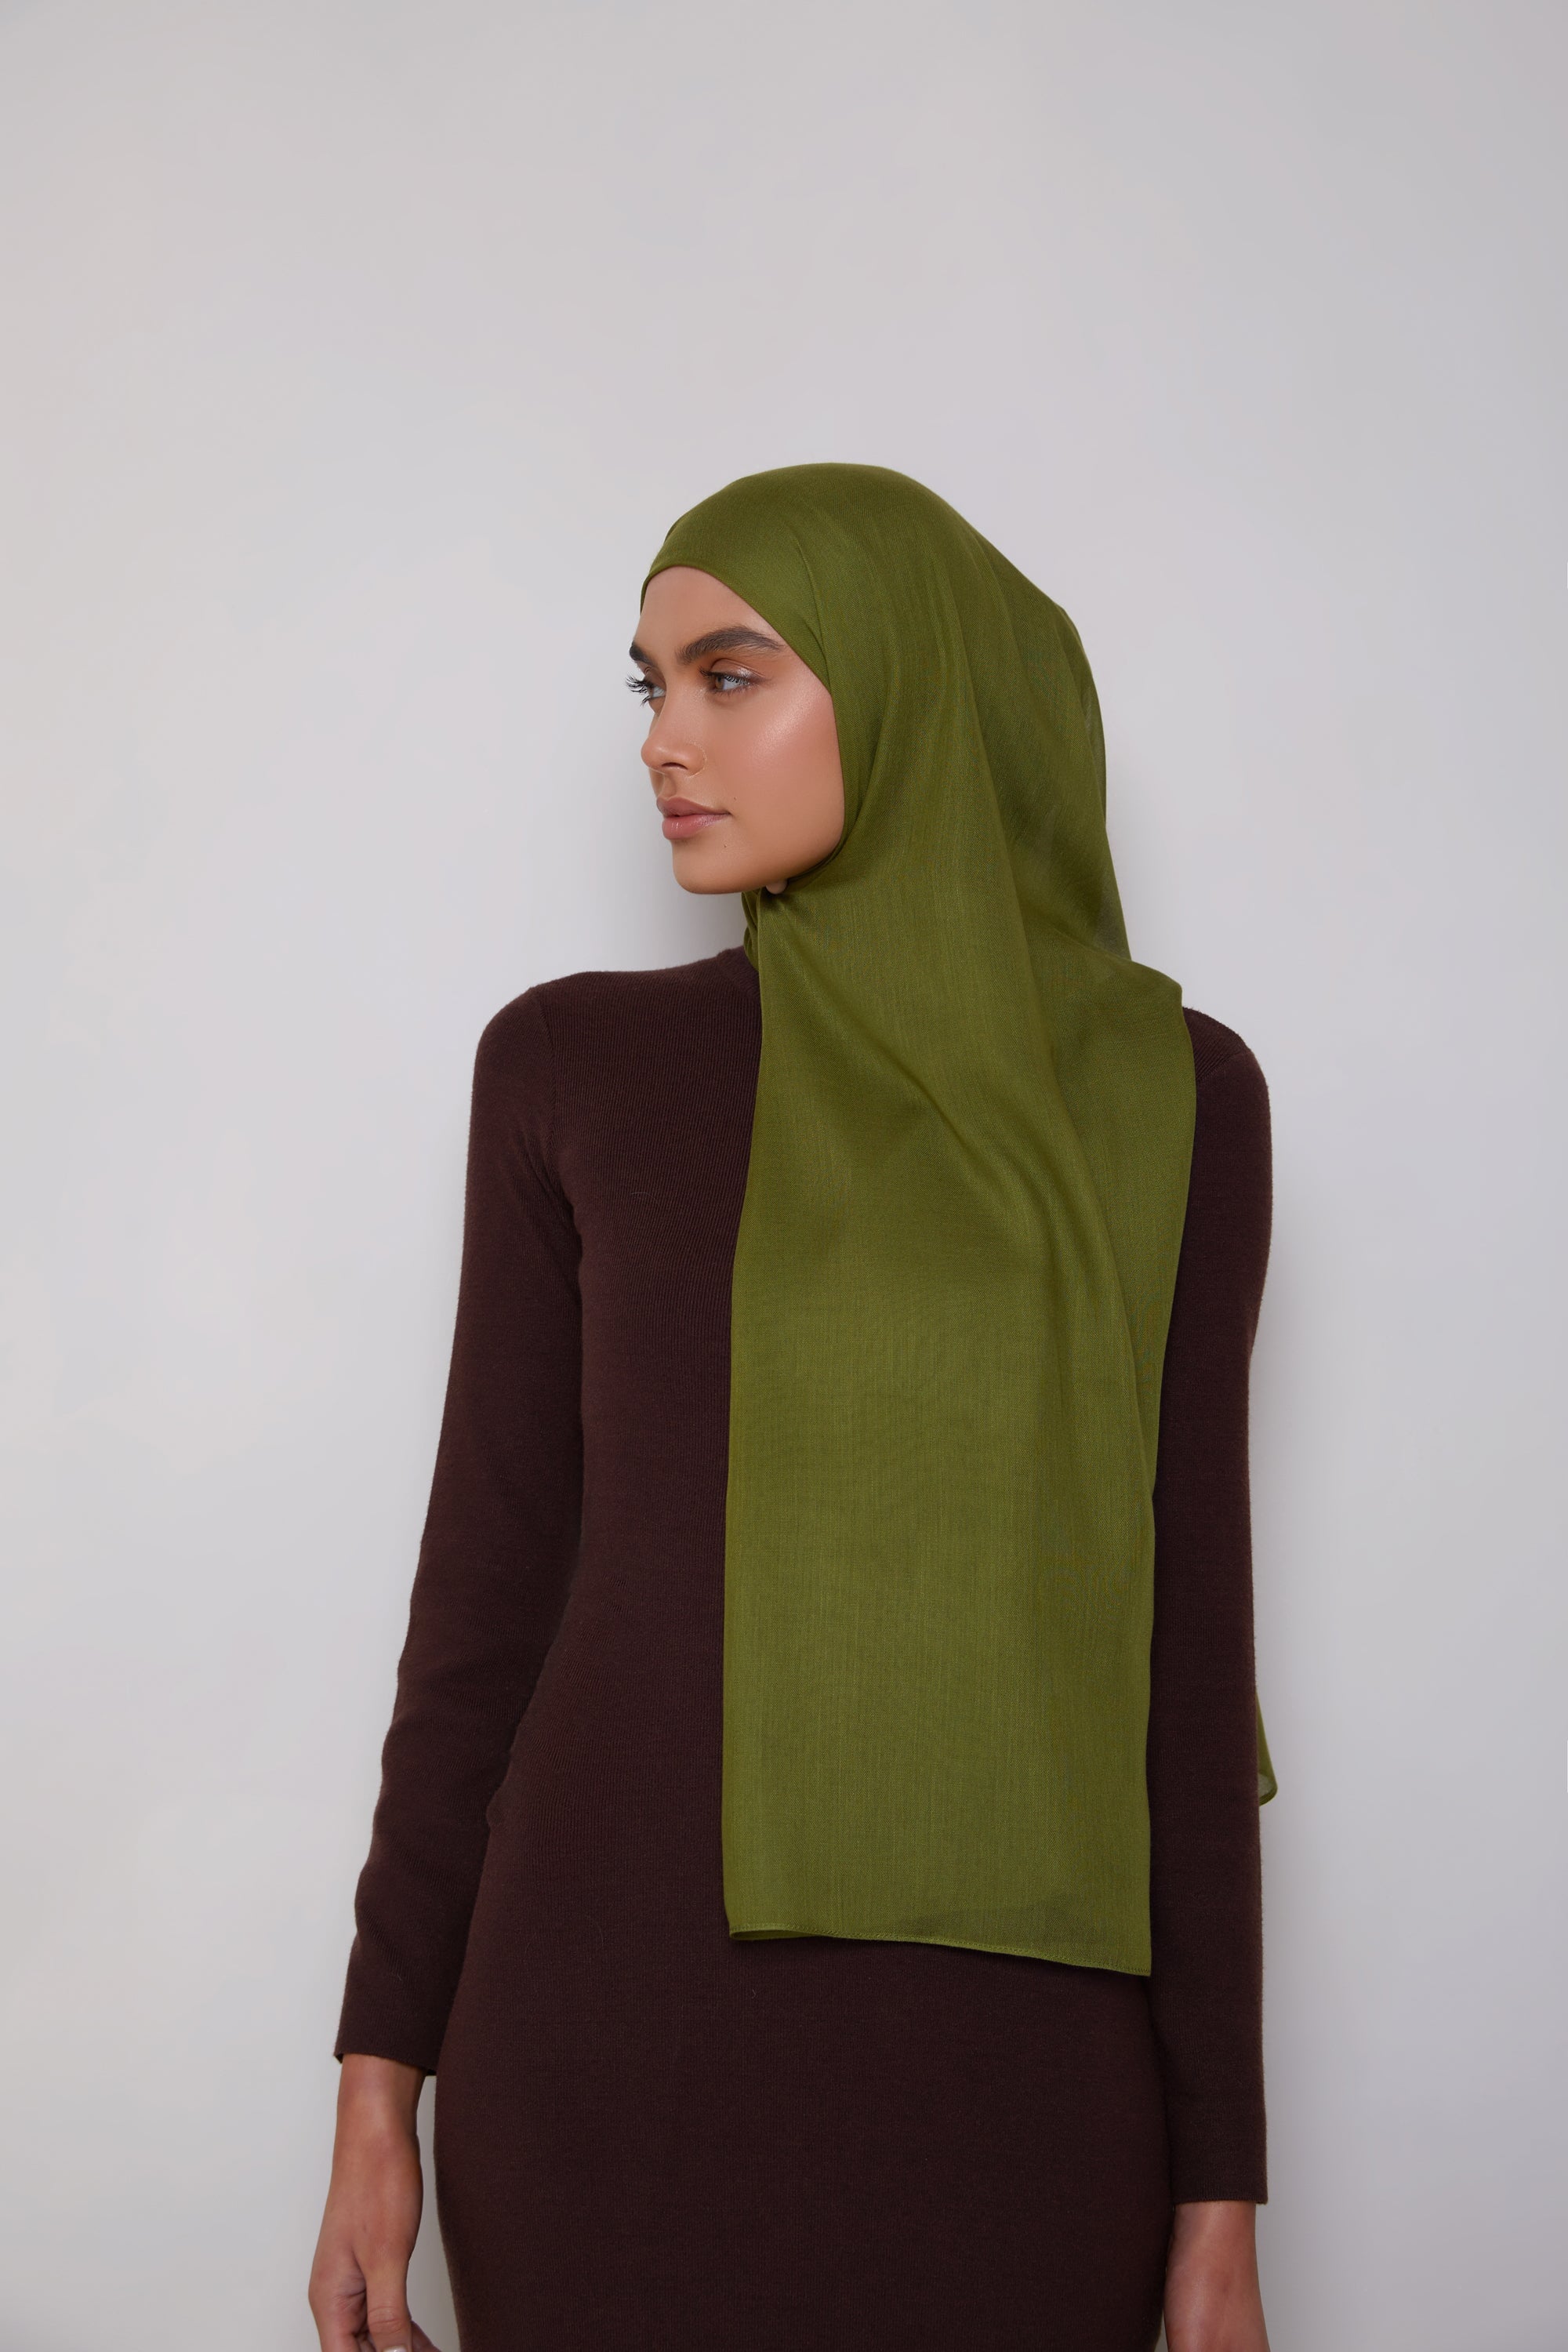 Modal Hijab - Avocado Veiled 